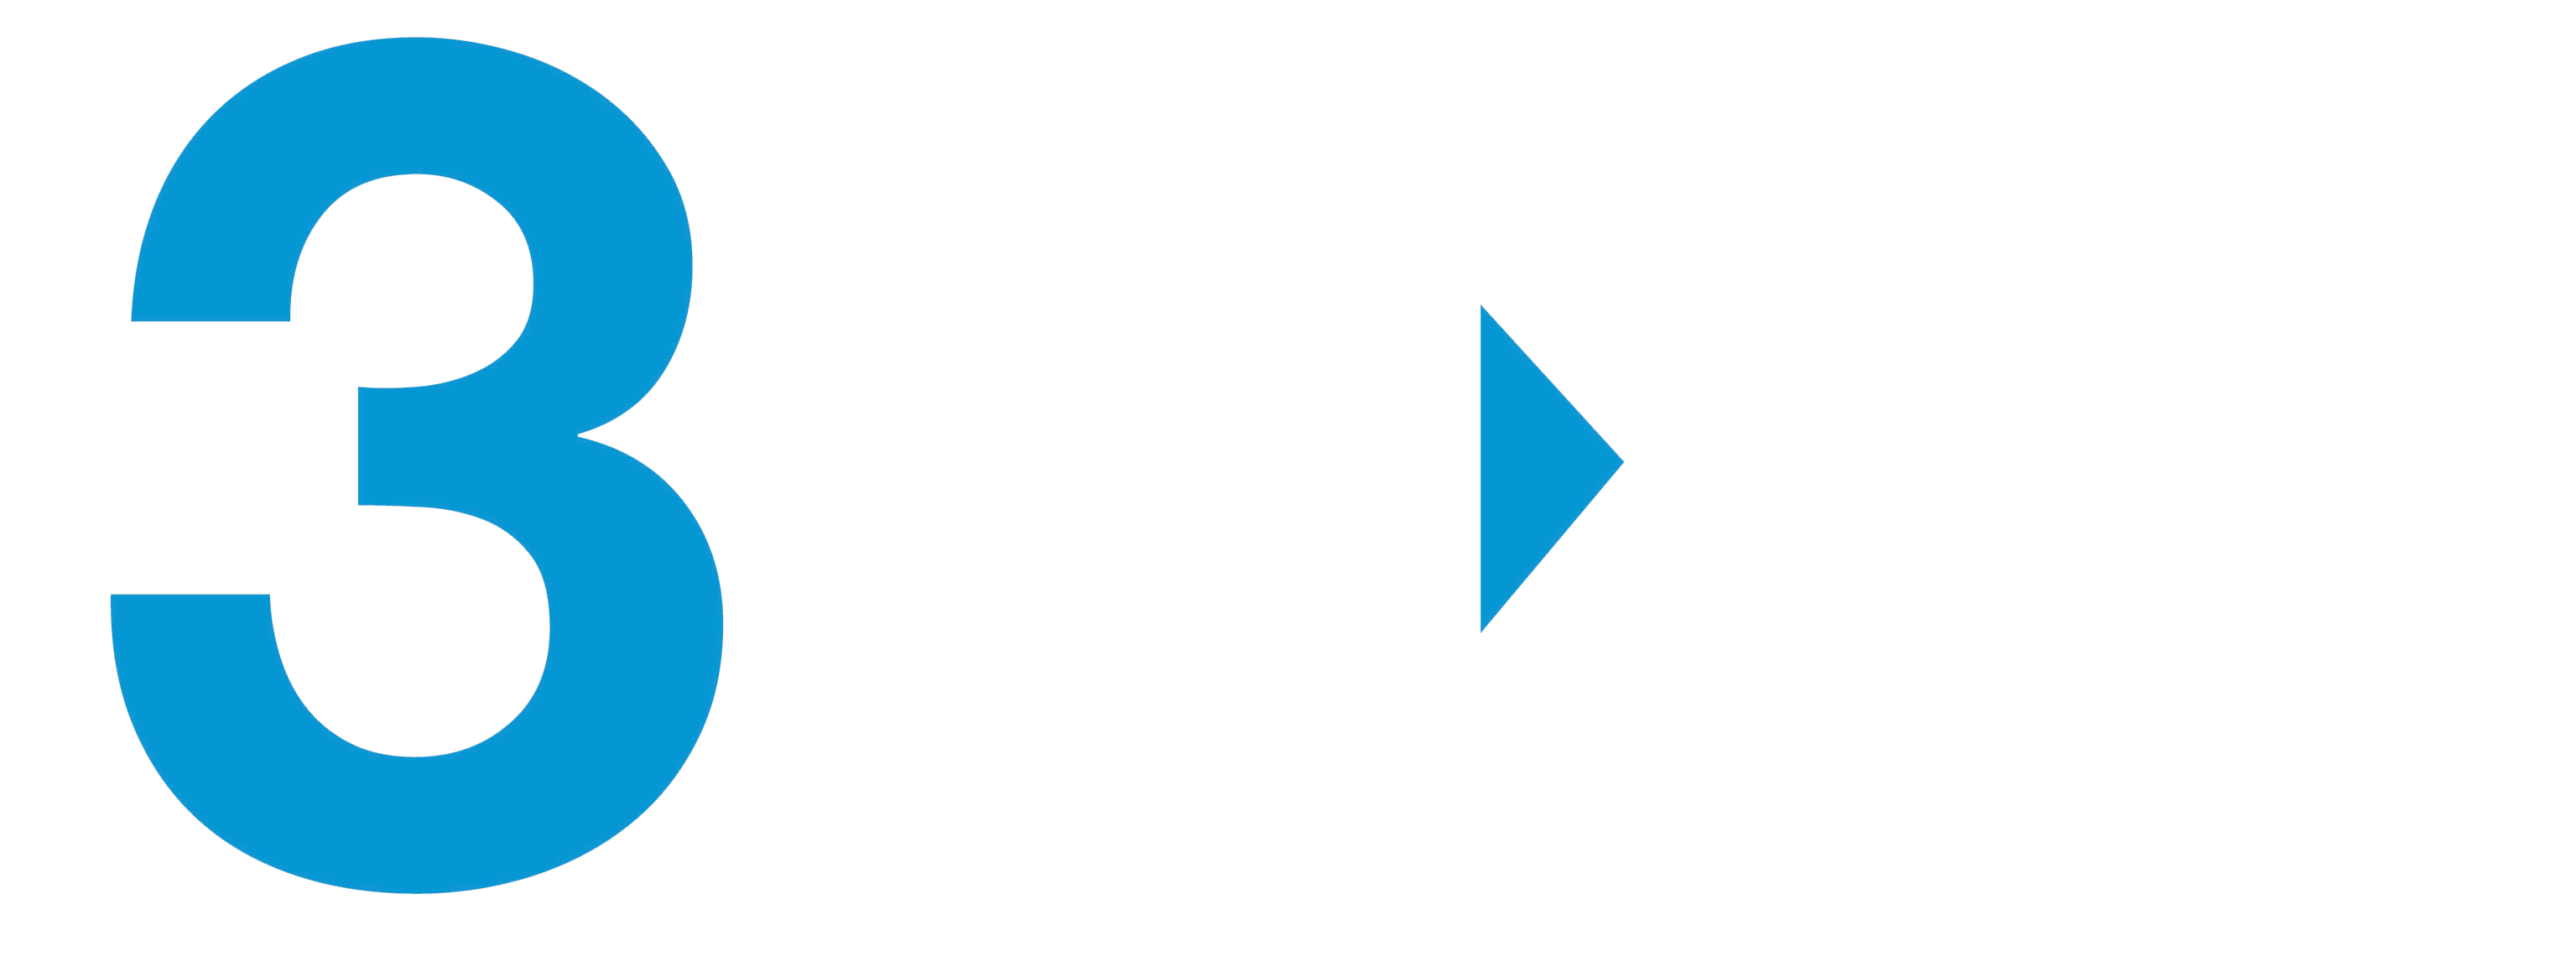 3CX logo_white